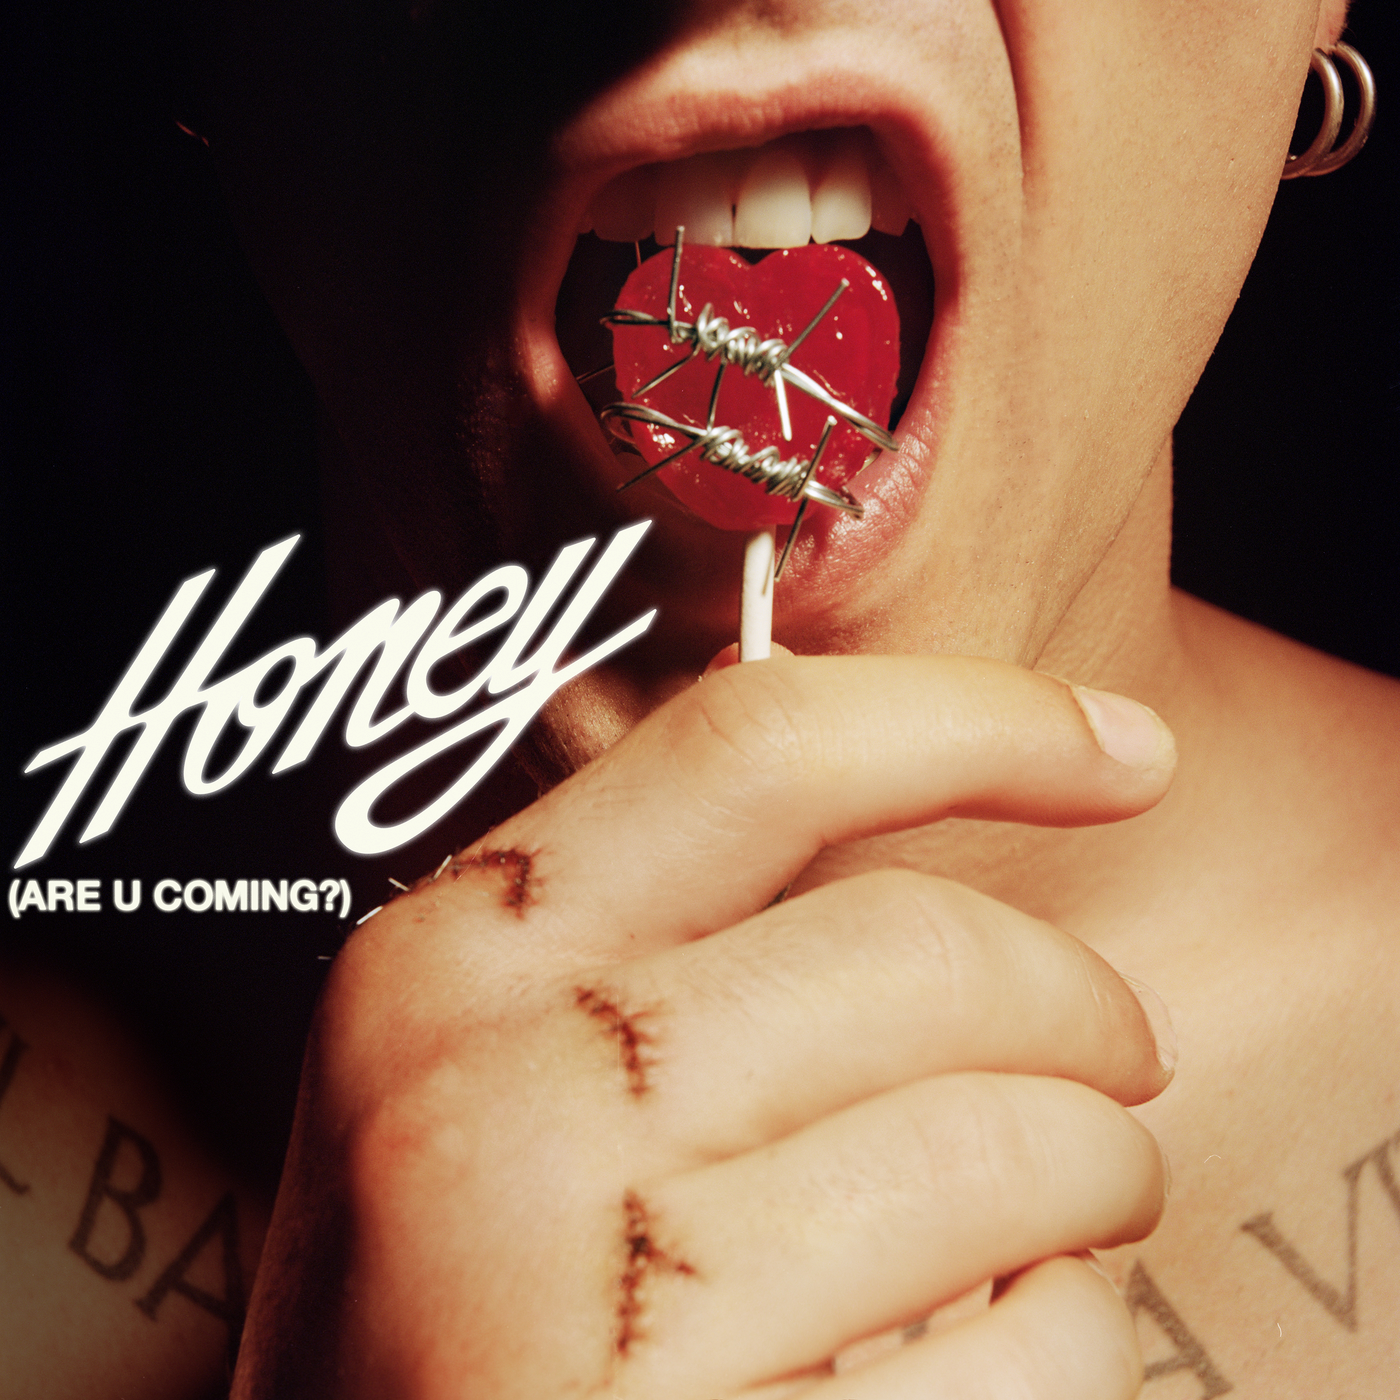 HONEY(ARE U COMING? )／Maneskin